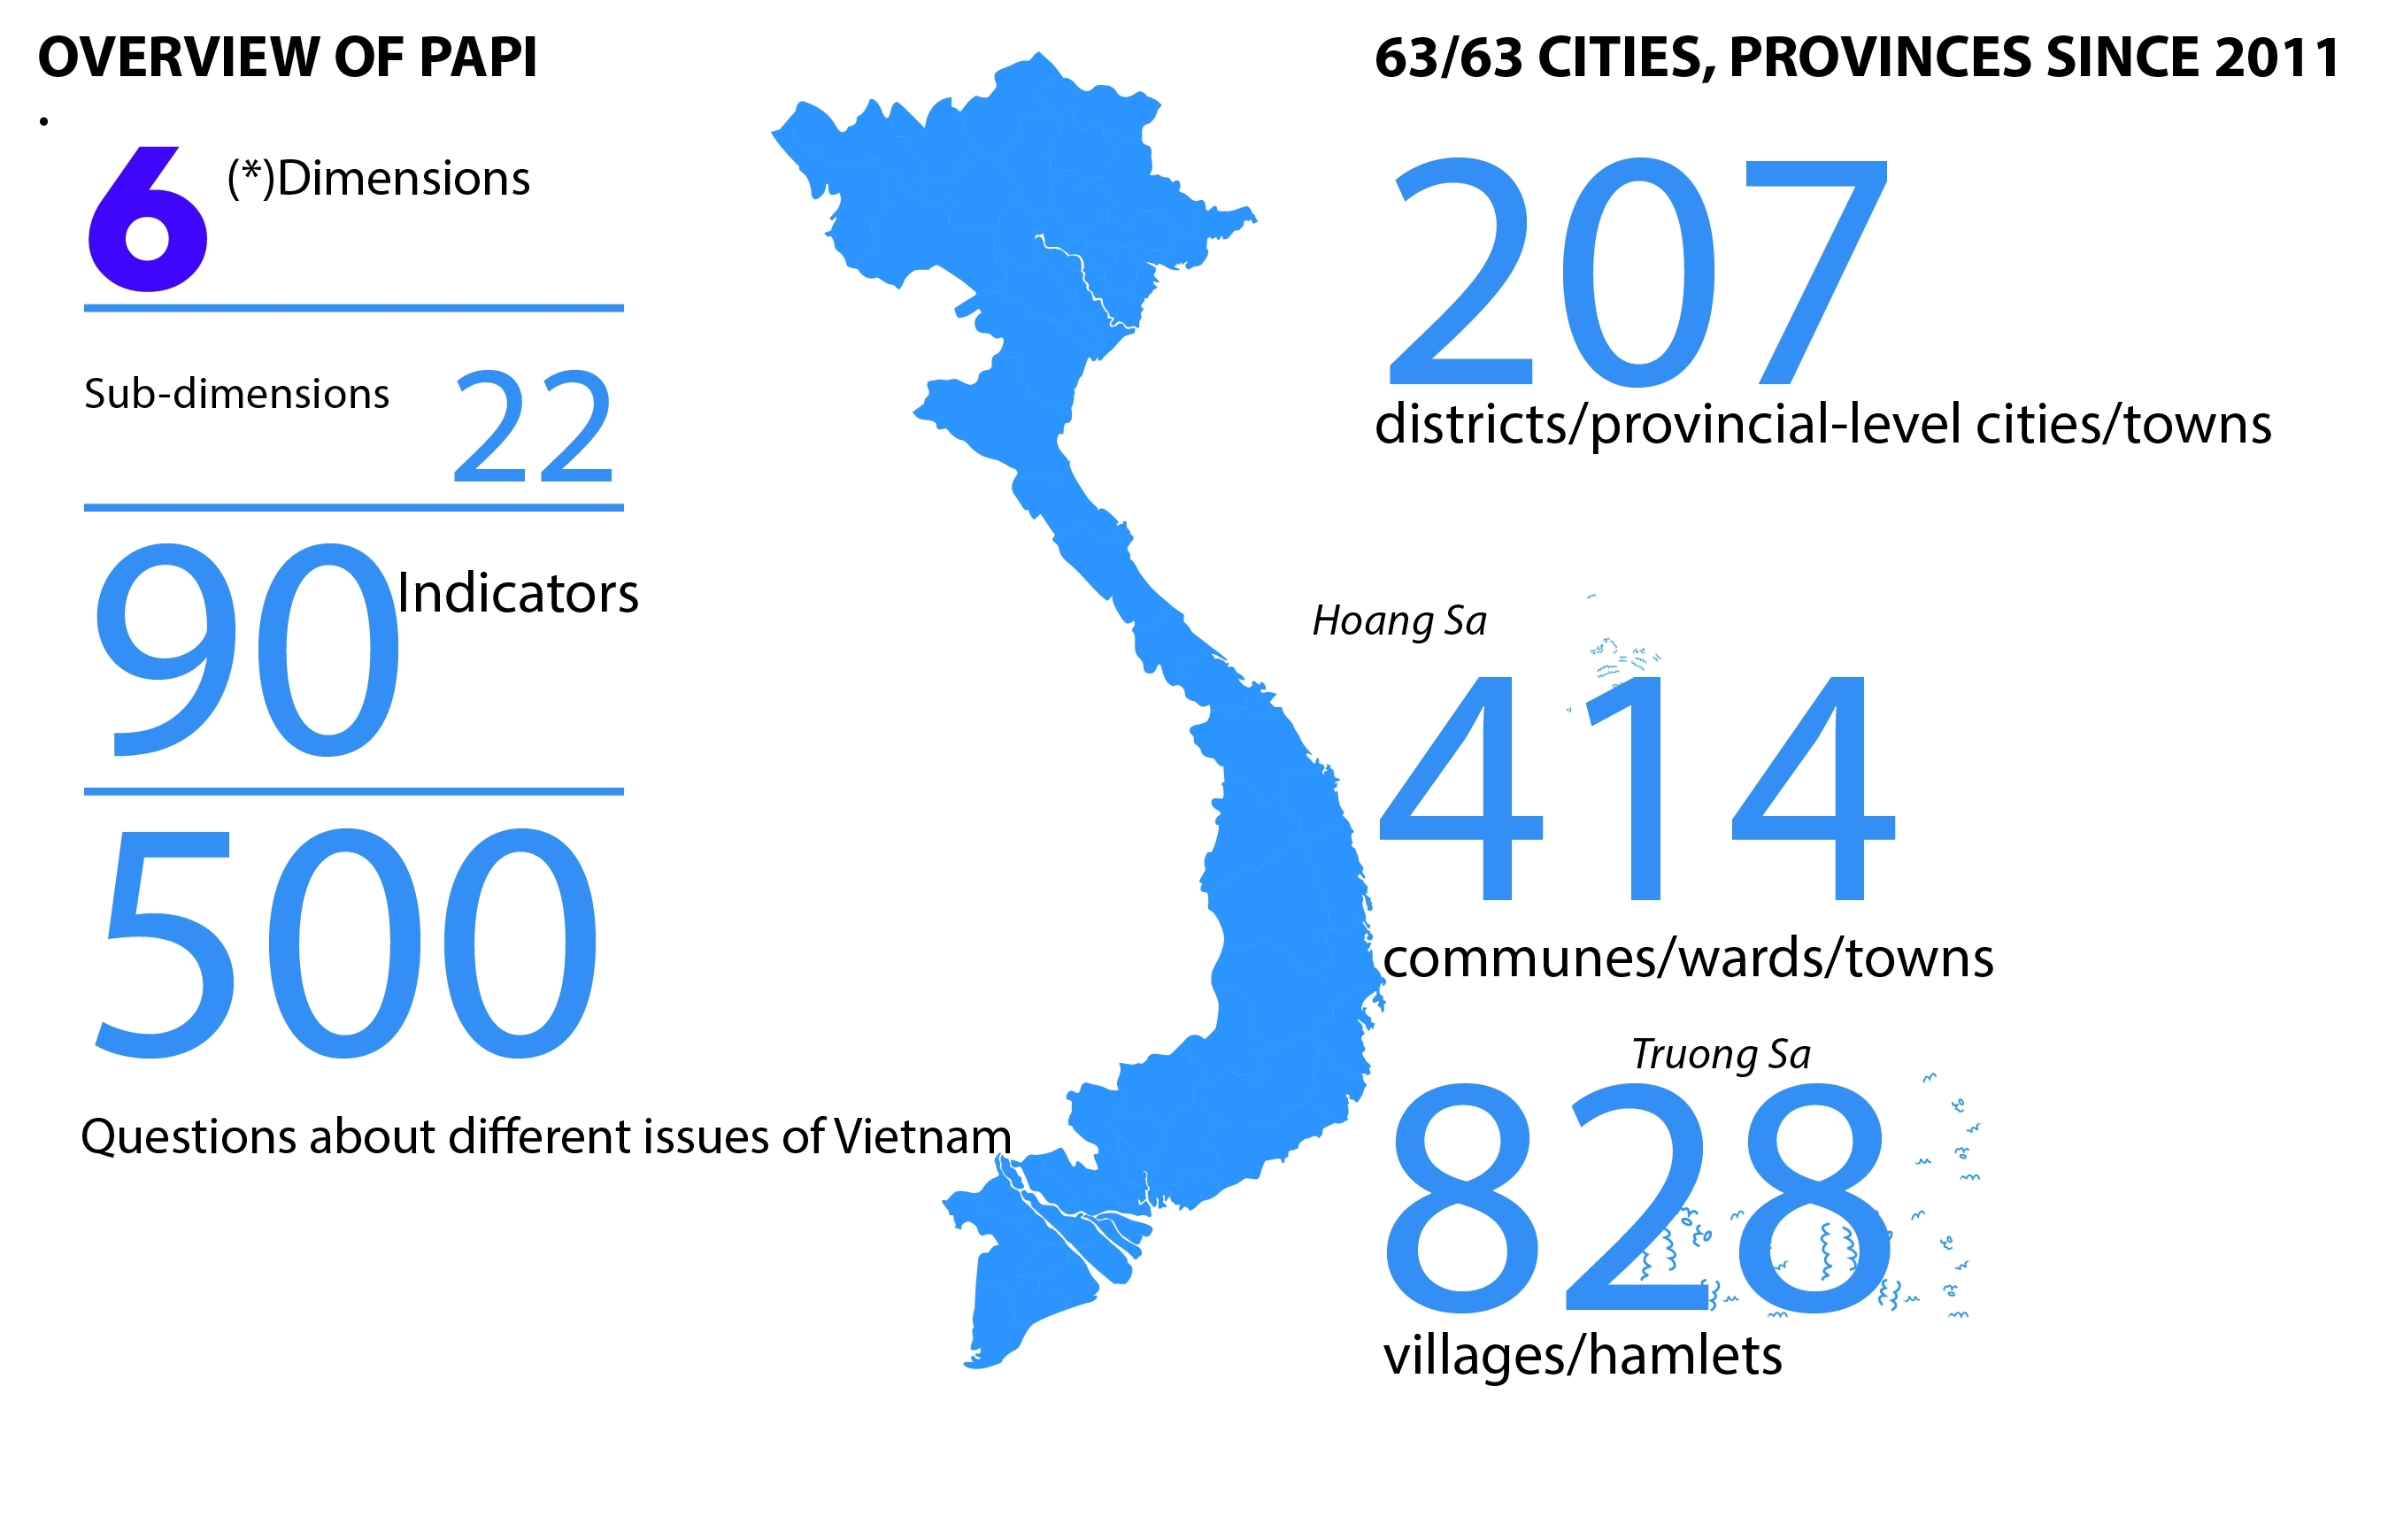 Overview of PAPI in Vietnam